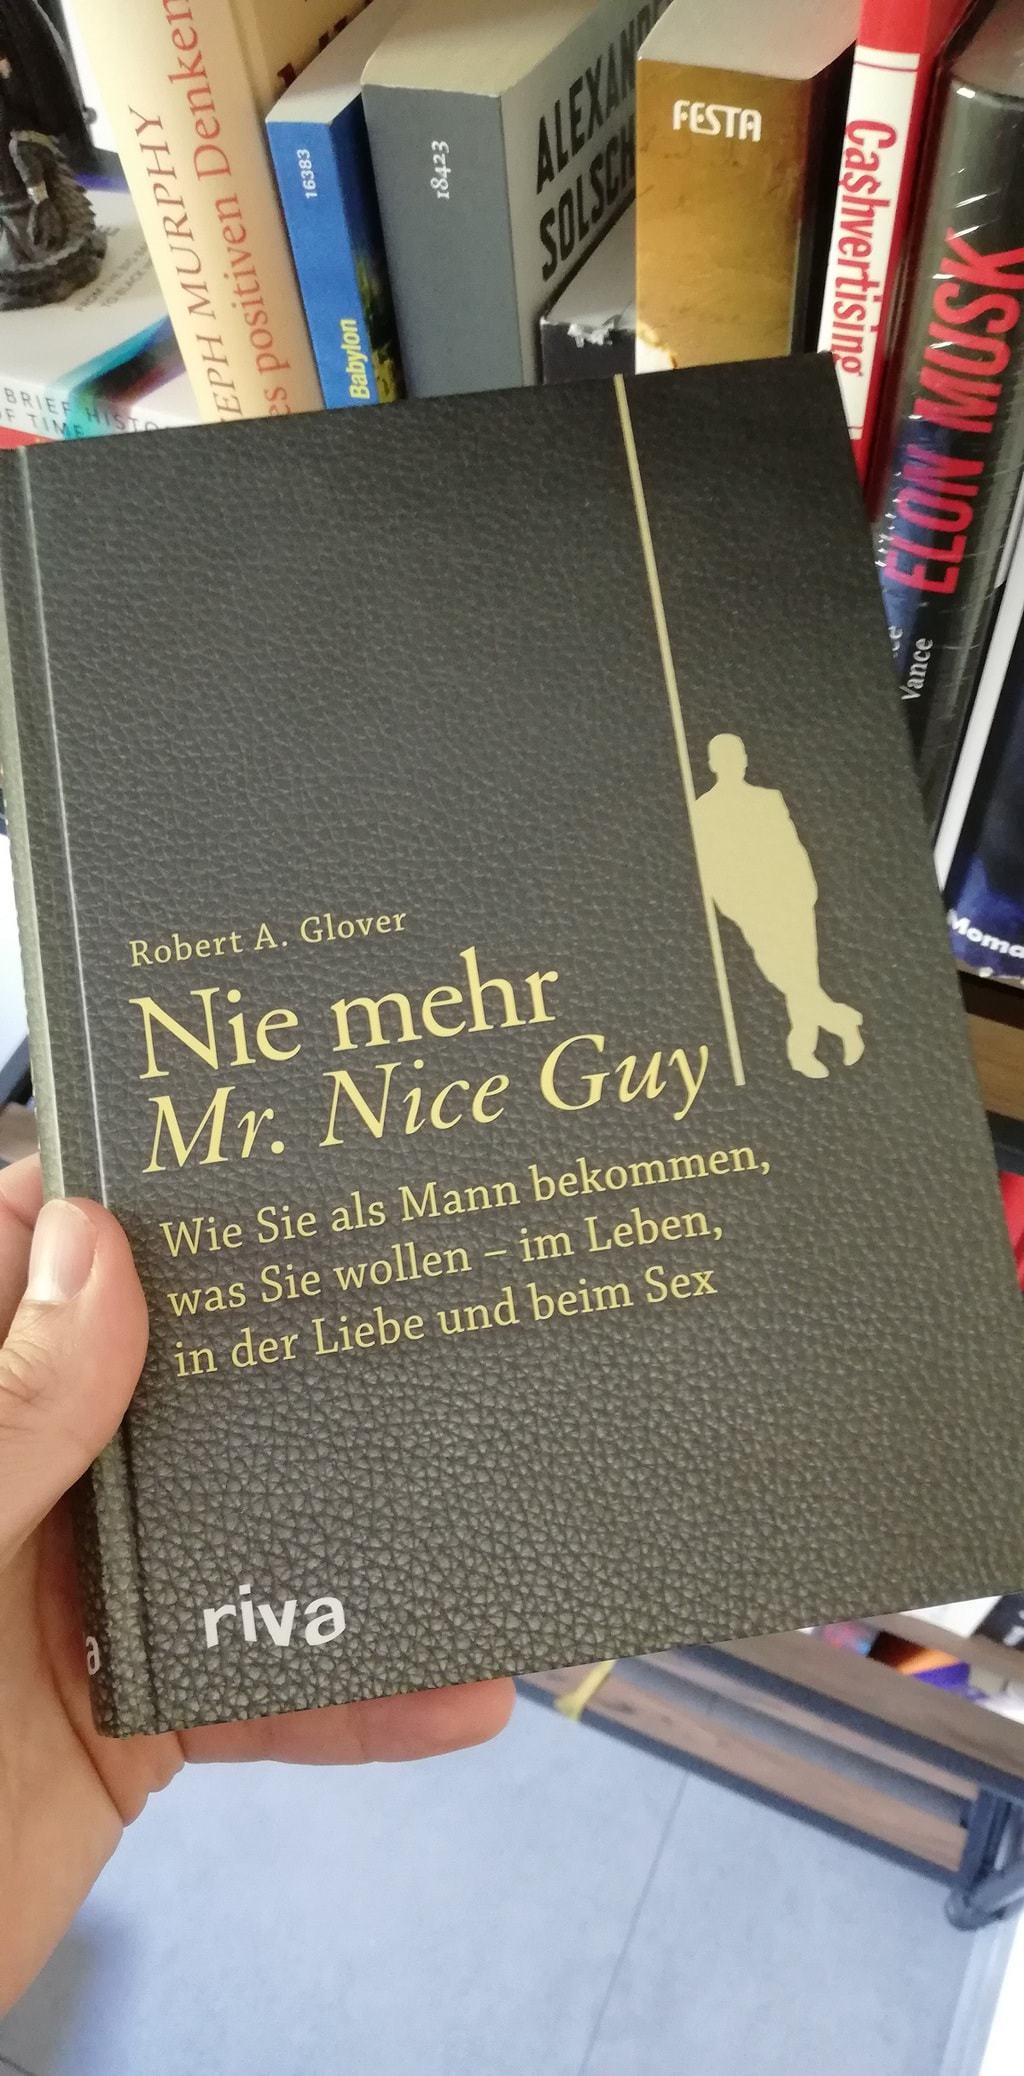 No more mister nice guy german copy